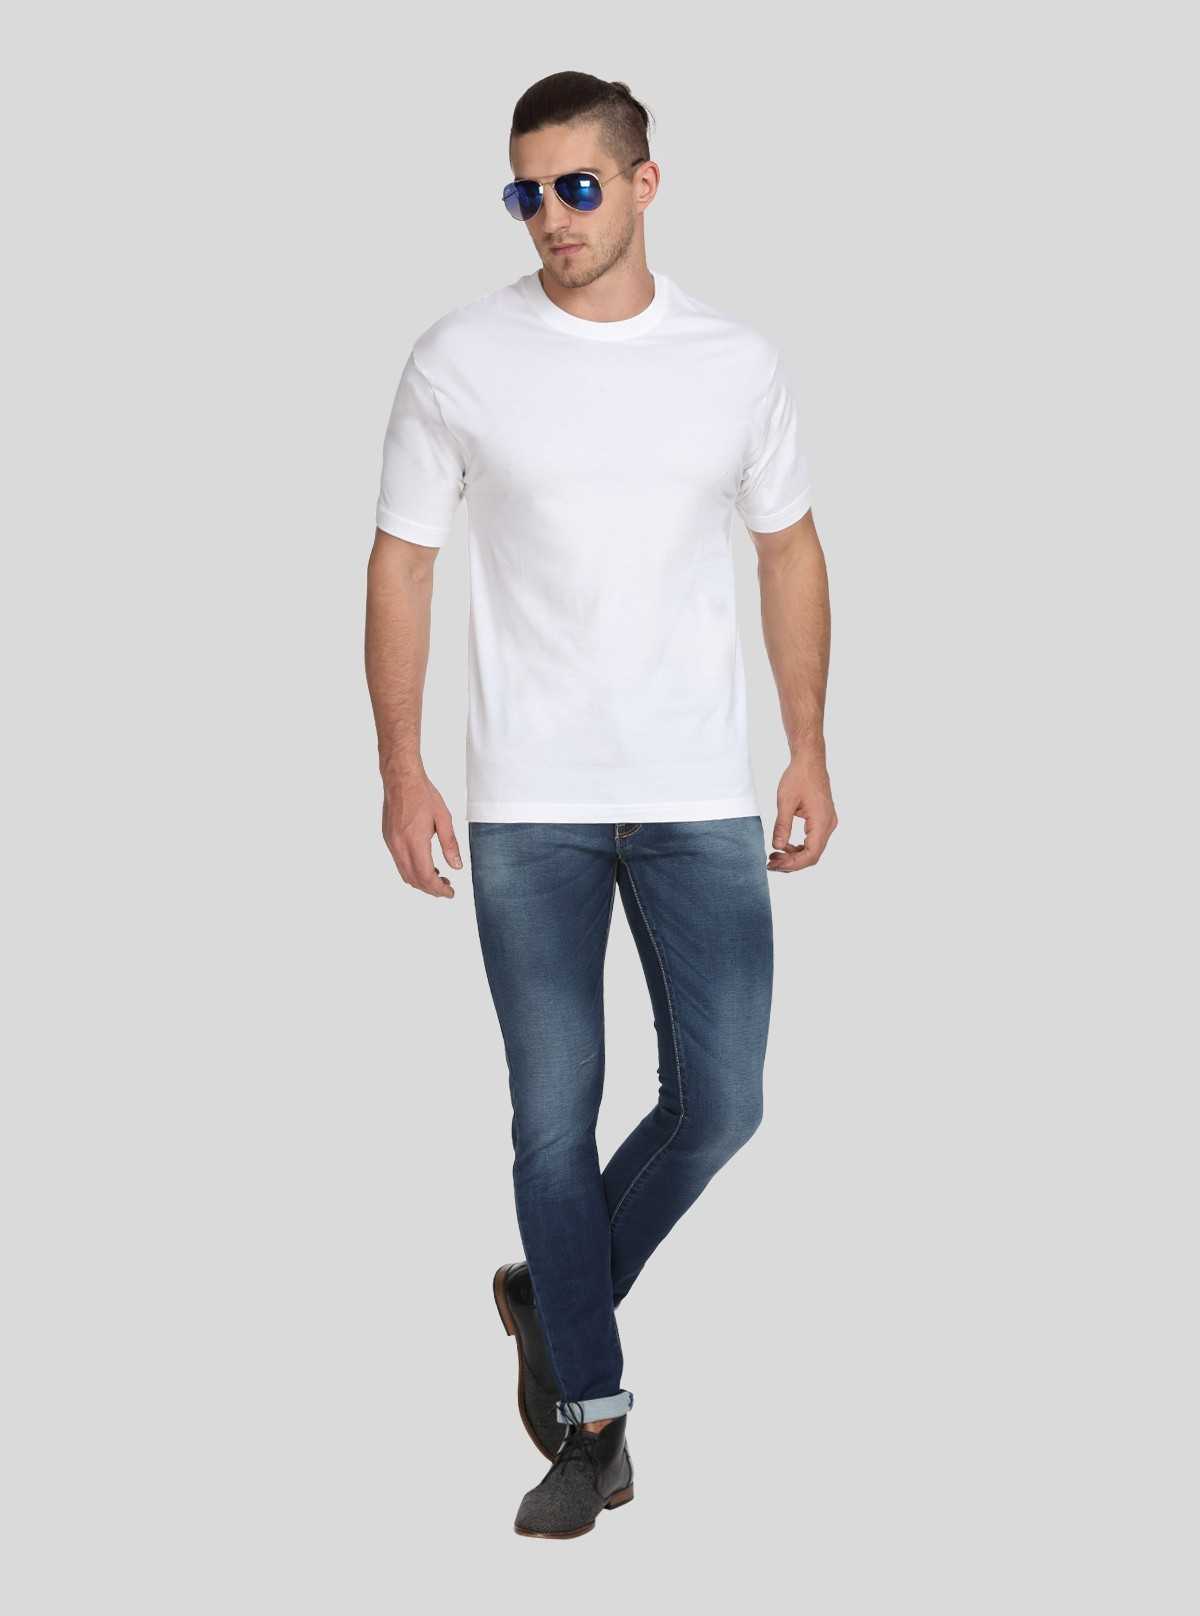 white crew neck tshirts | Short sleeved tee |bandf online| white is